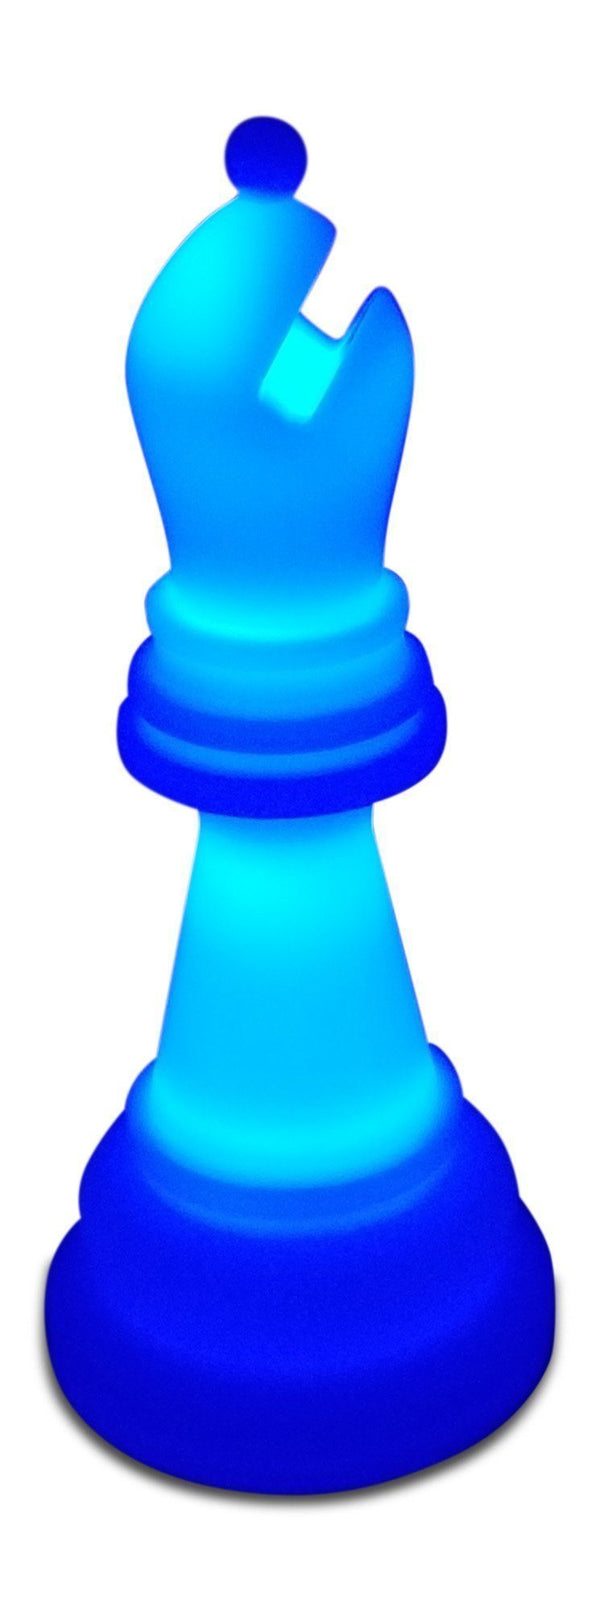 MegaChess 20 Inch Premium Plastic Bishop Light-Up Giant Chess Piece - Blue |  | GiantChessUSA